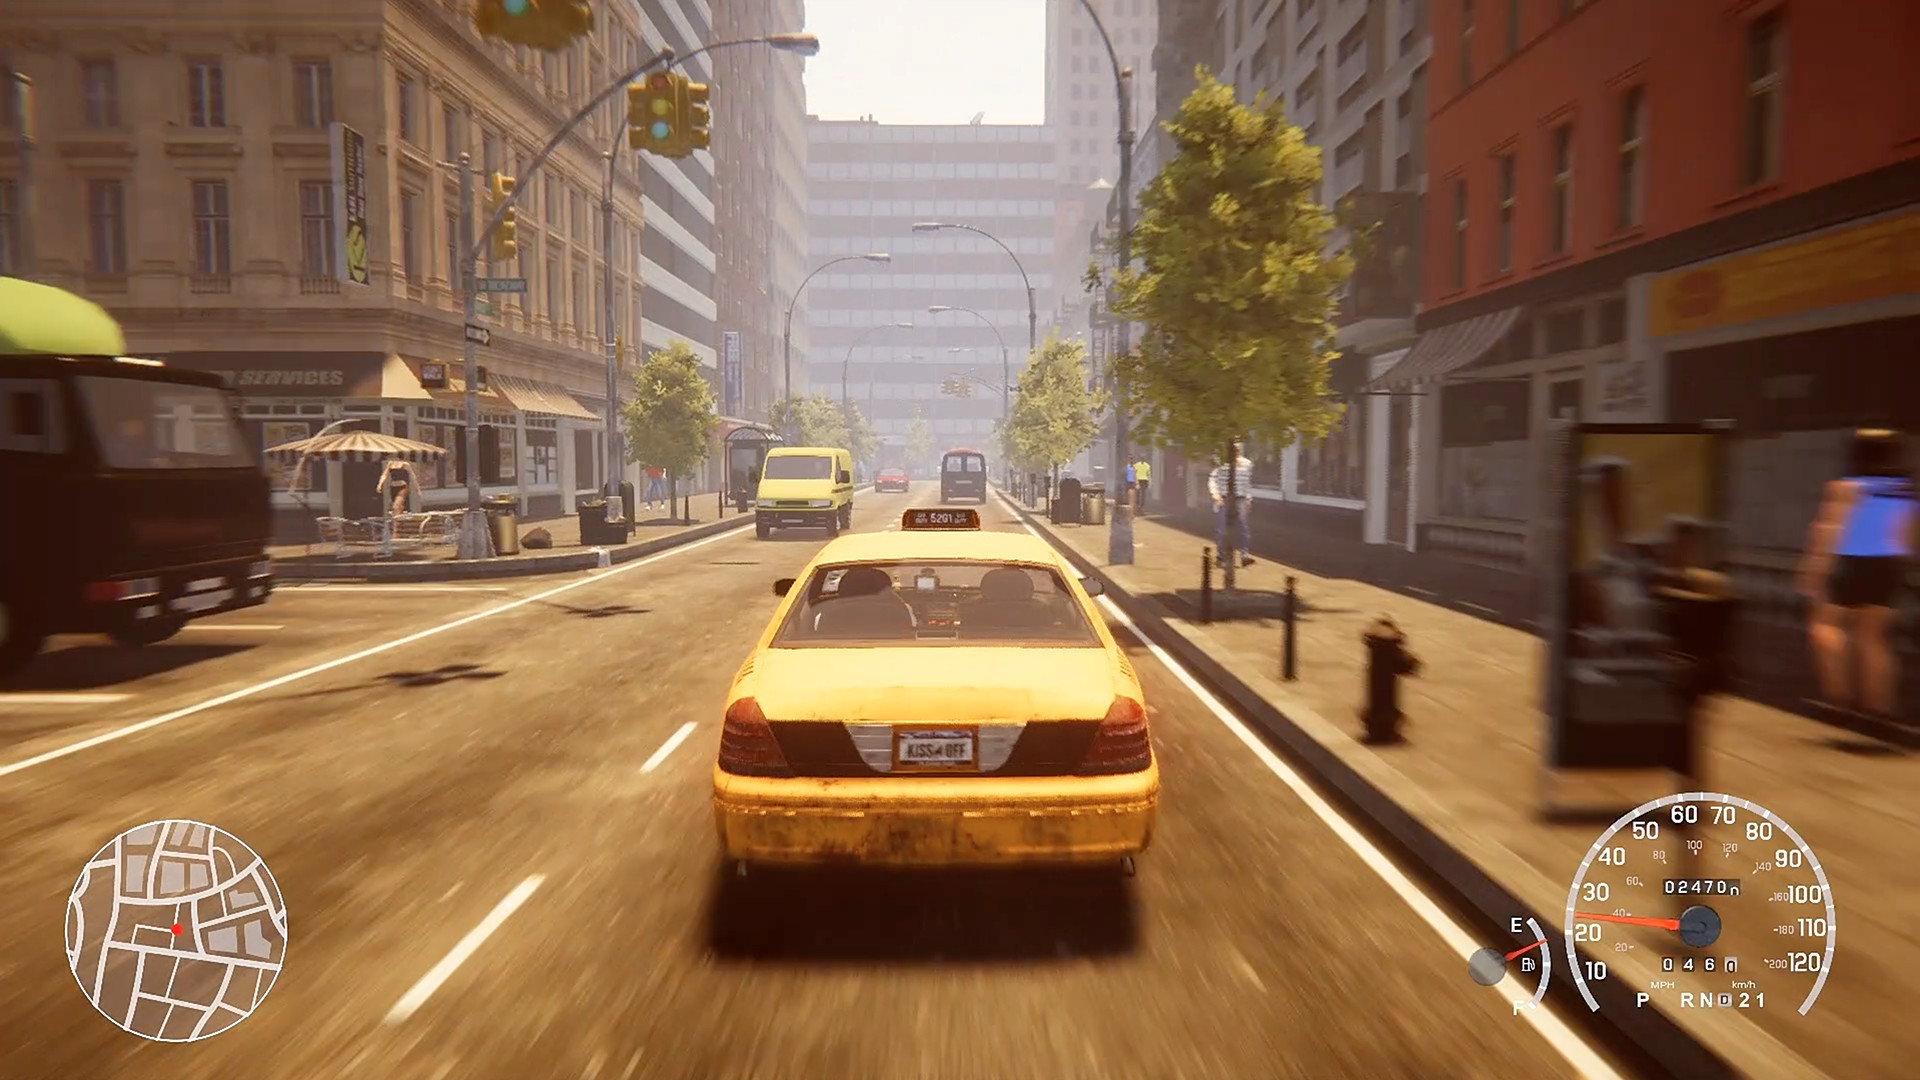 Taxi Simulator On Steam - roblox taxi simulator 2 wiki